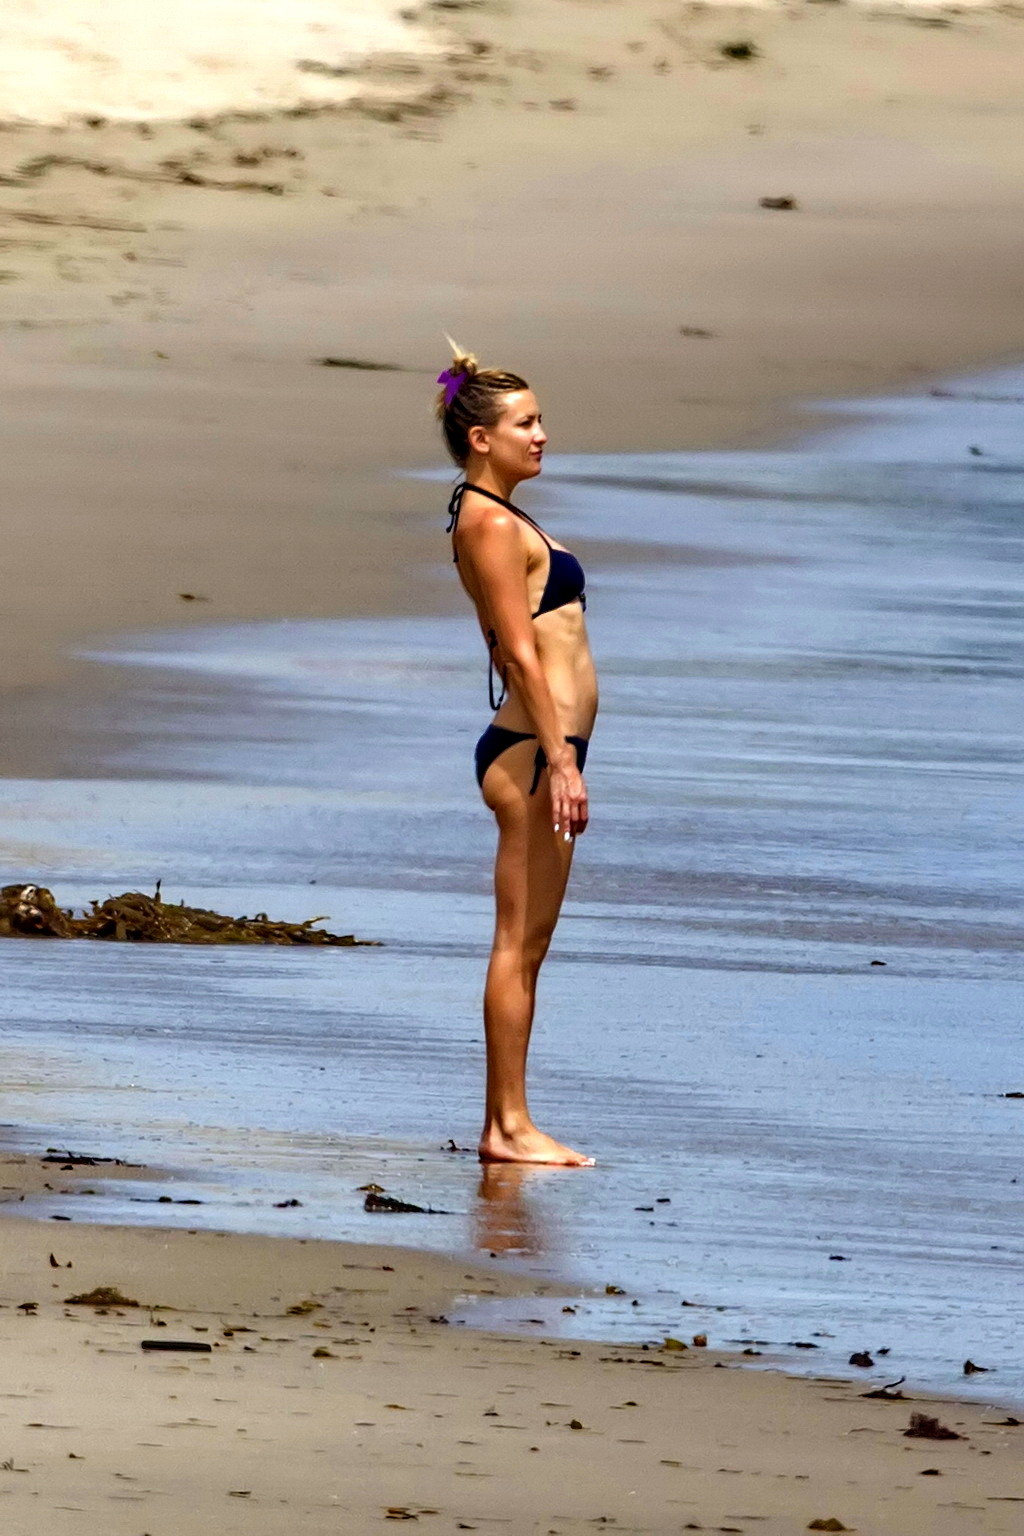 Kate Hudson Showing Off Her Bikini Body On A Beach In Malibu